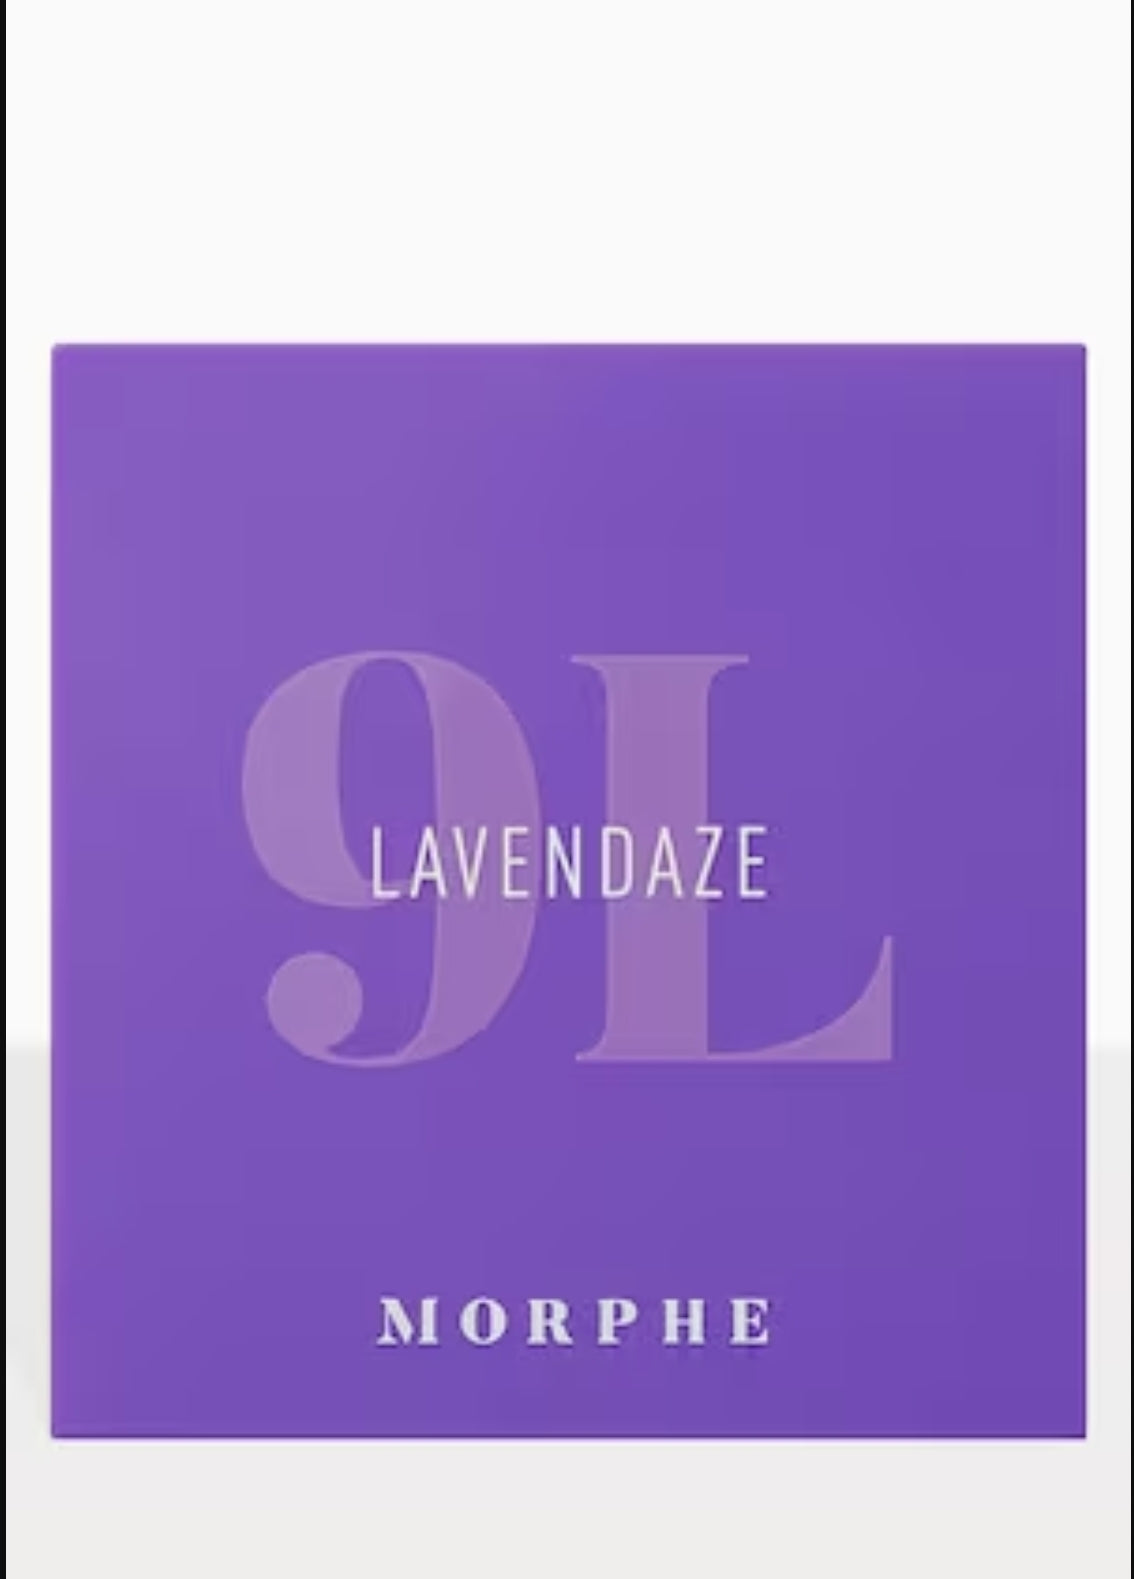 Morphe 9L Lavendaze Artistry Eyeshadow Palette